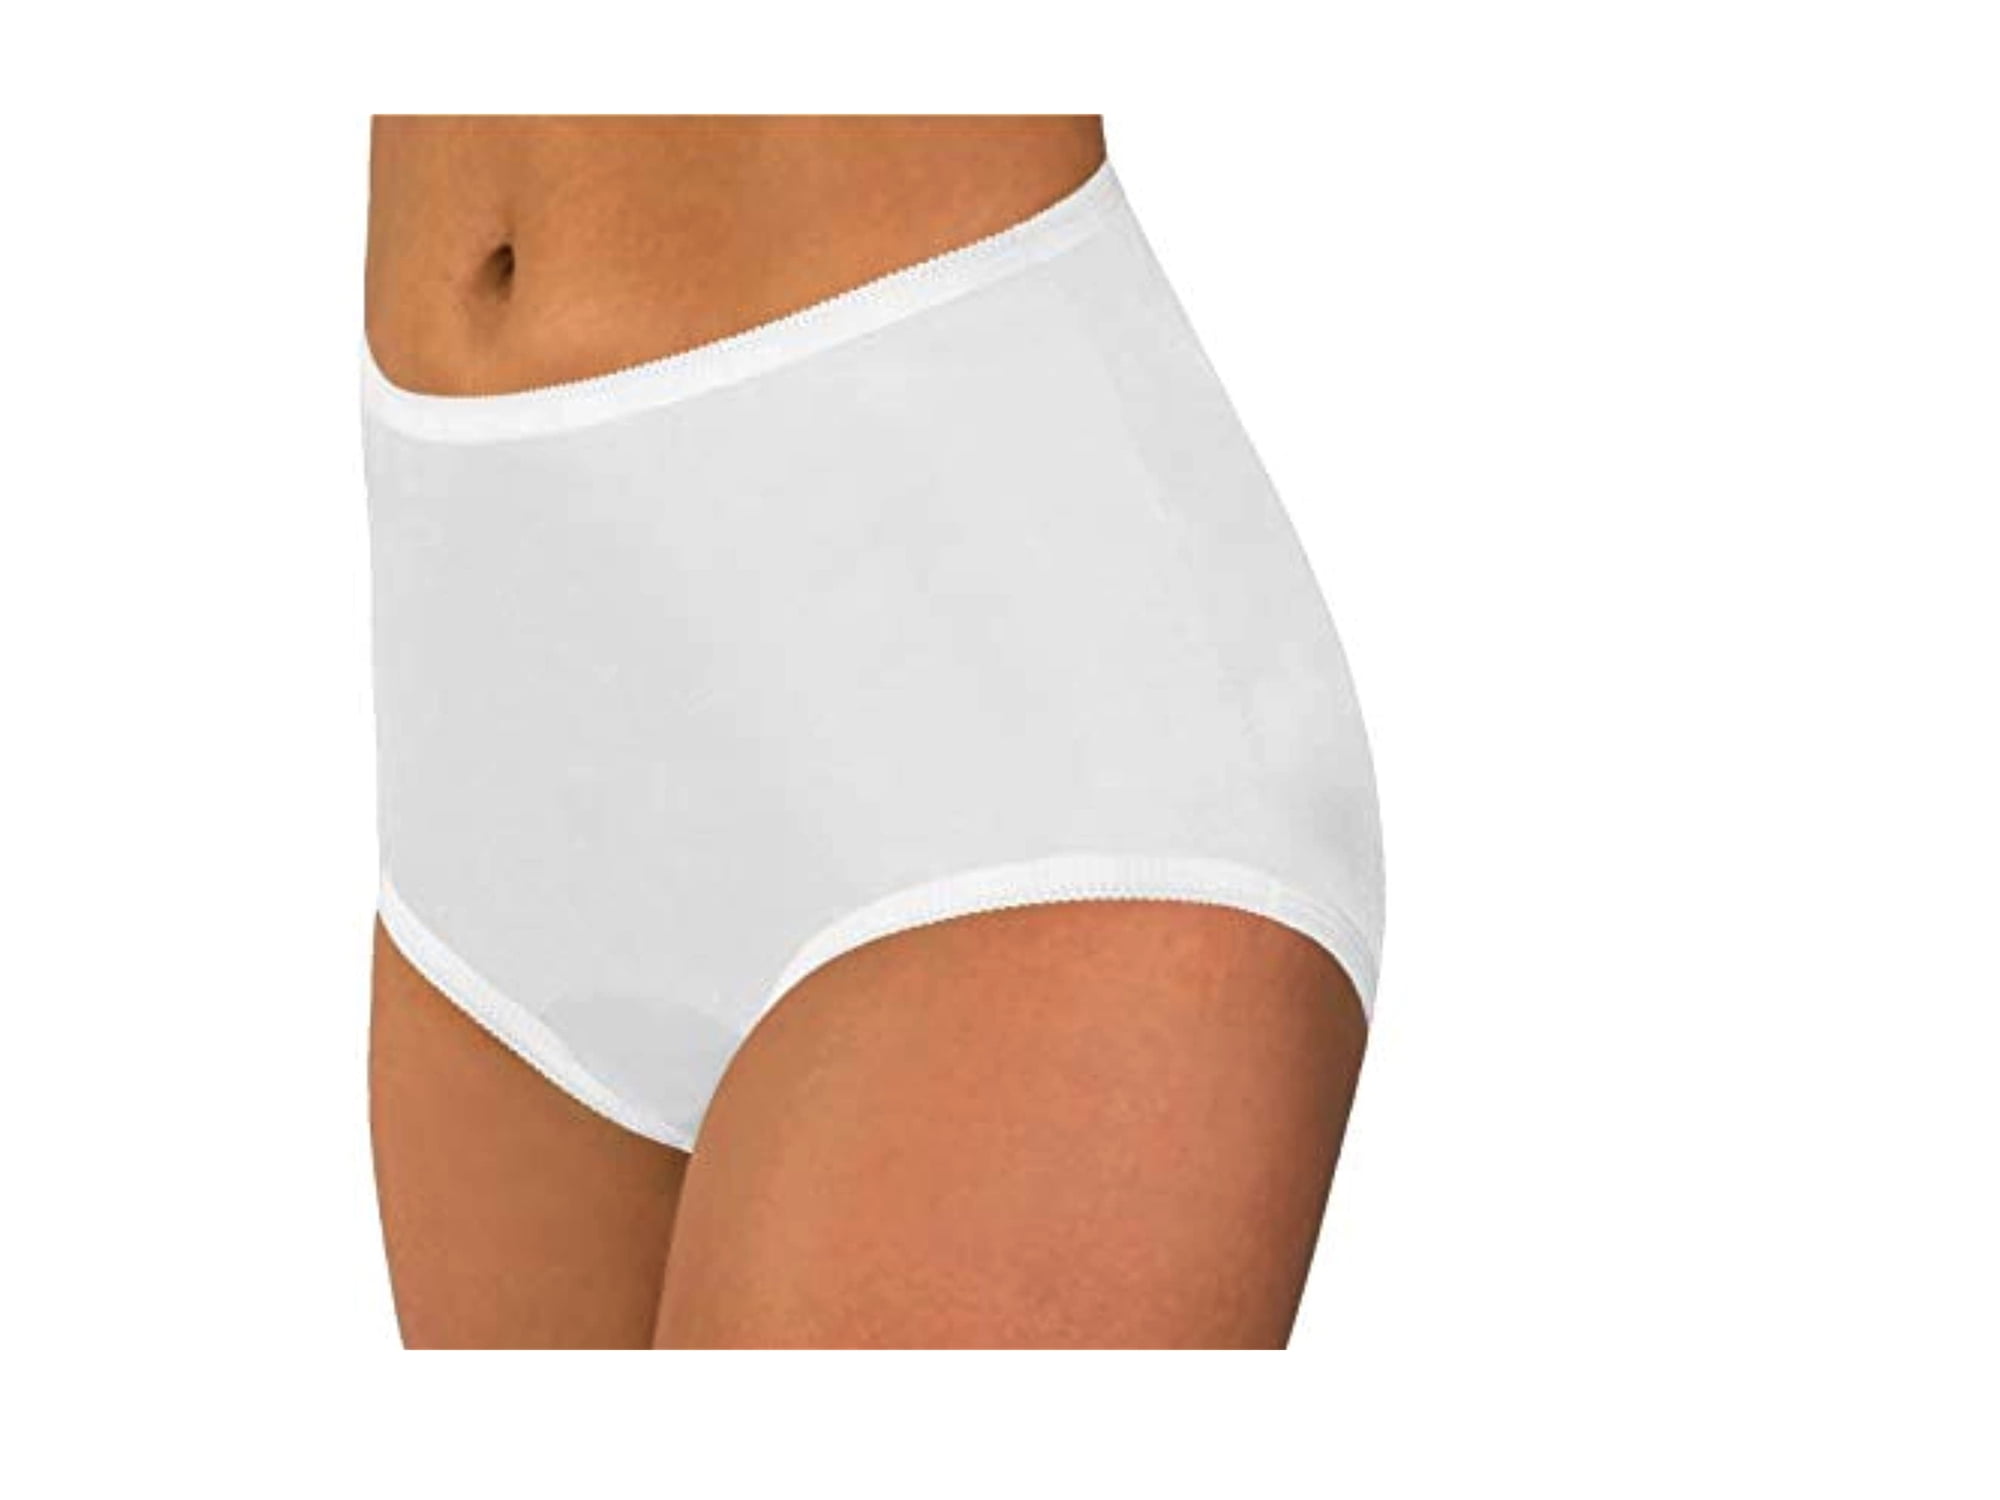 Hanes Nylon Briefs Panties 6-Pack Underwear Assorted Colors Women's Size 7  43935689254 